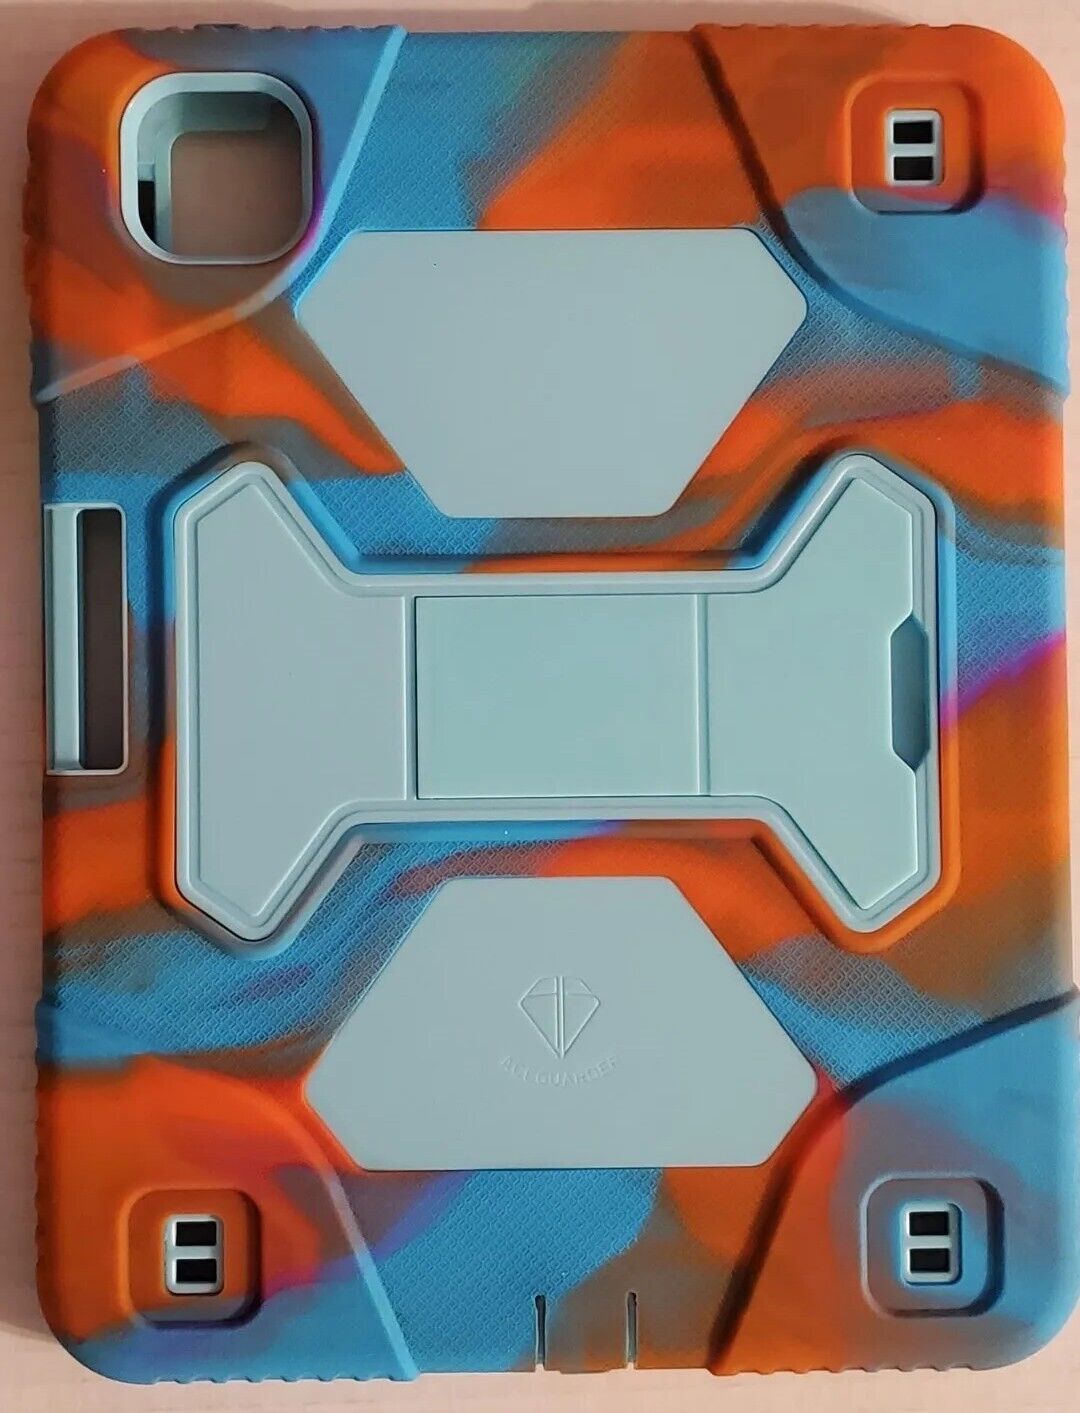 ACEGUARDER IPAD PRO 11 inch Case stand , Camo orange/blue 